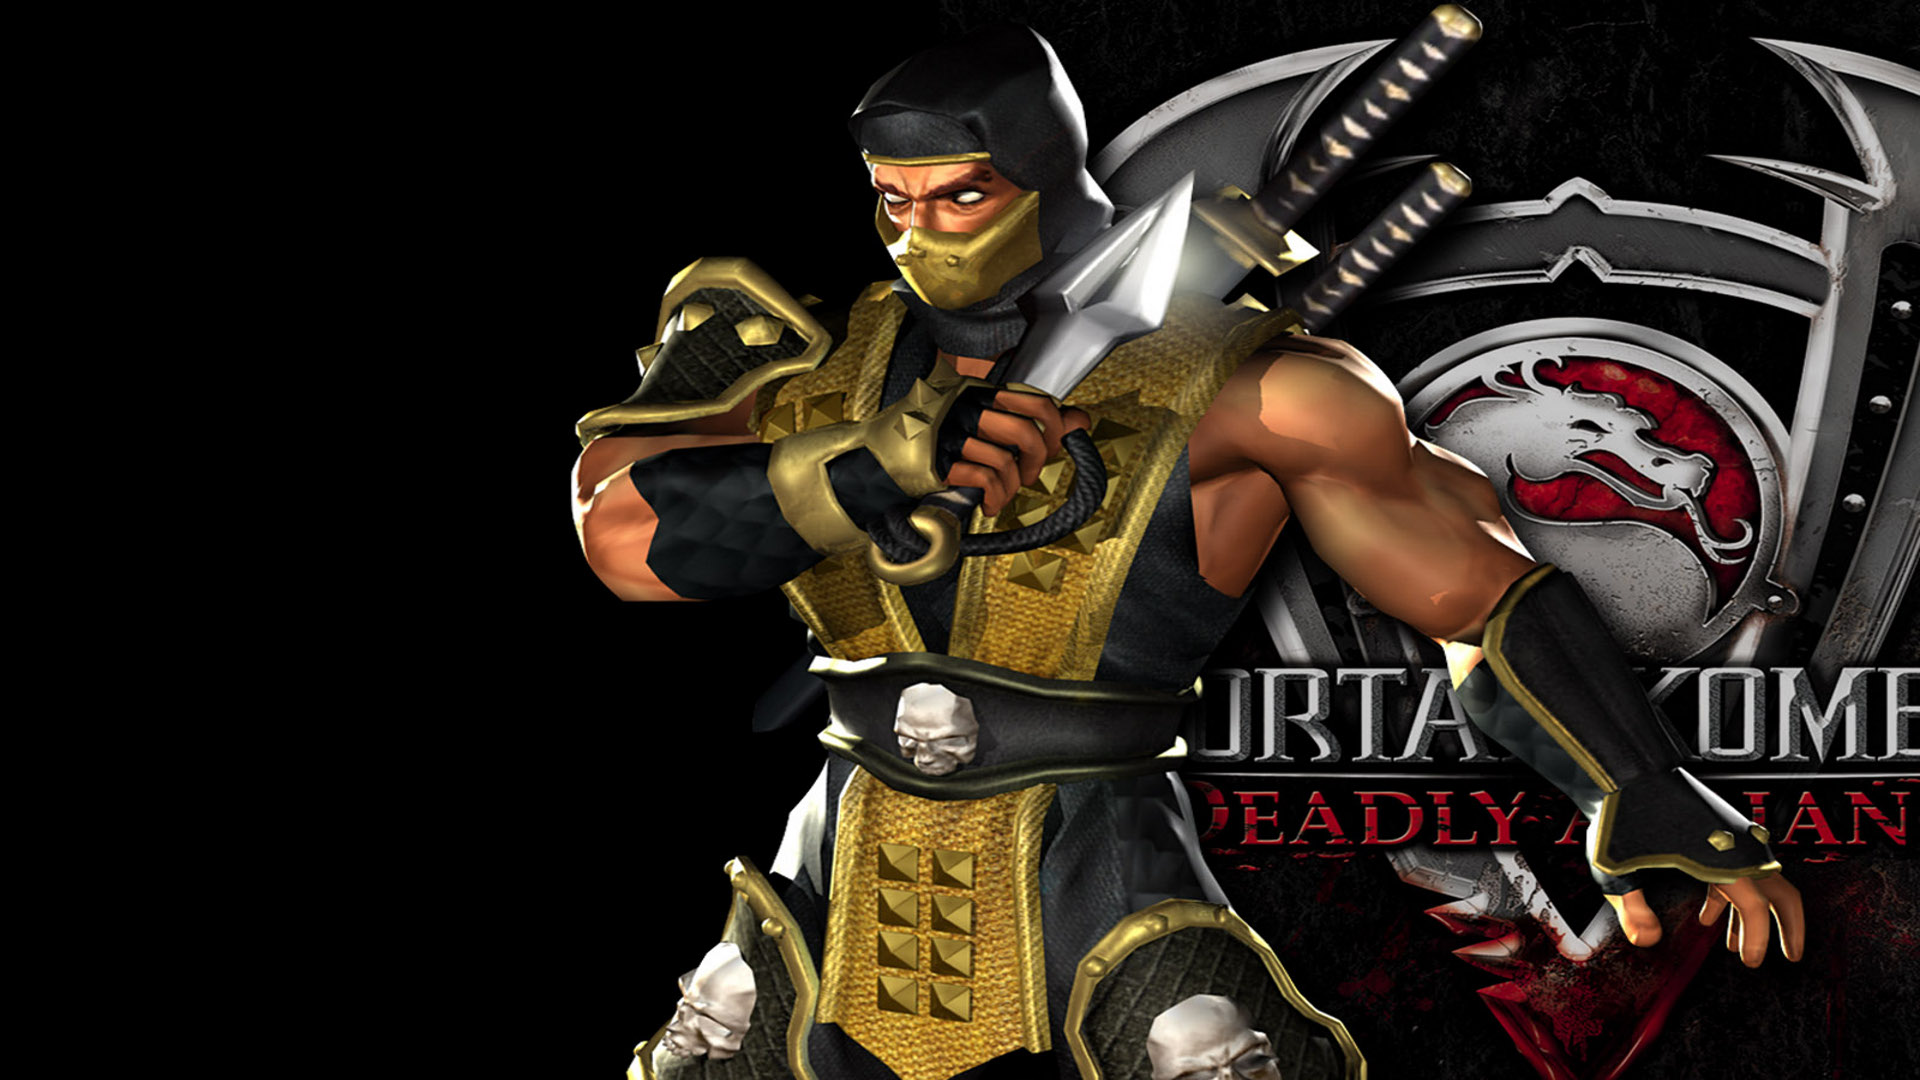 Descargar fondos de escritorio de Mortal Kombat: Deadly Alliance HD